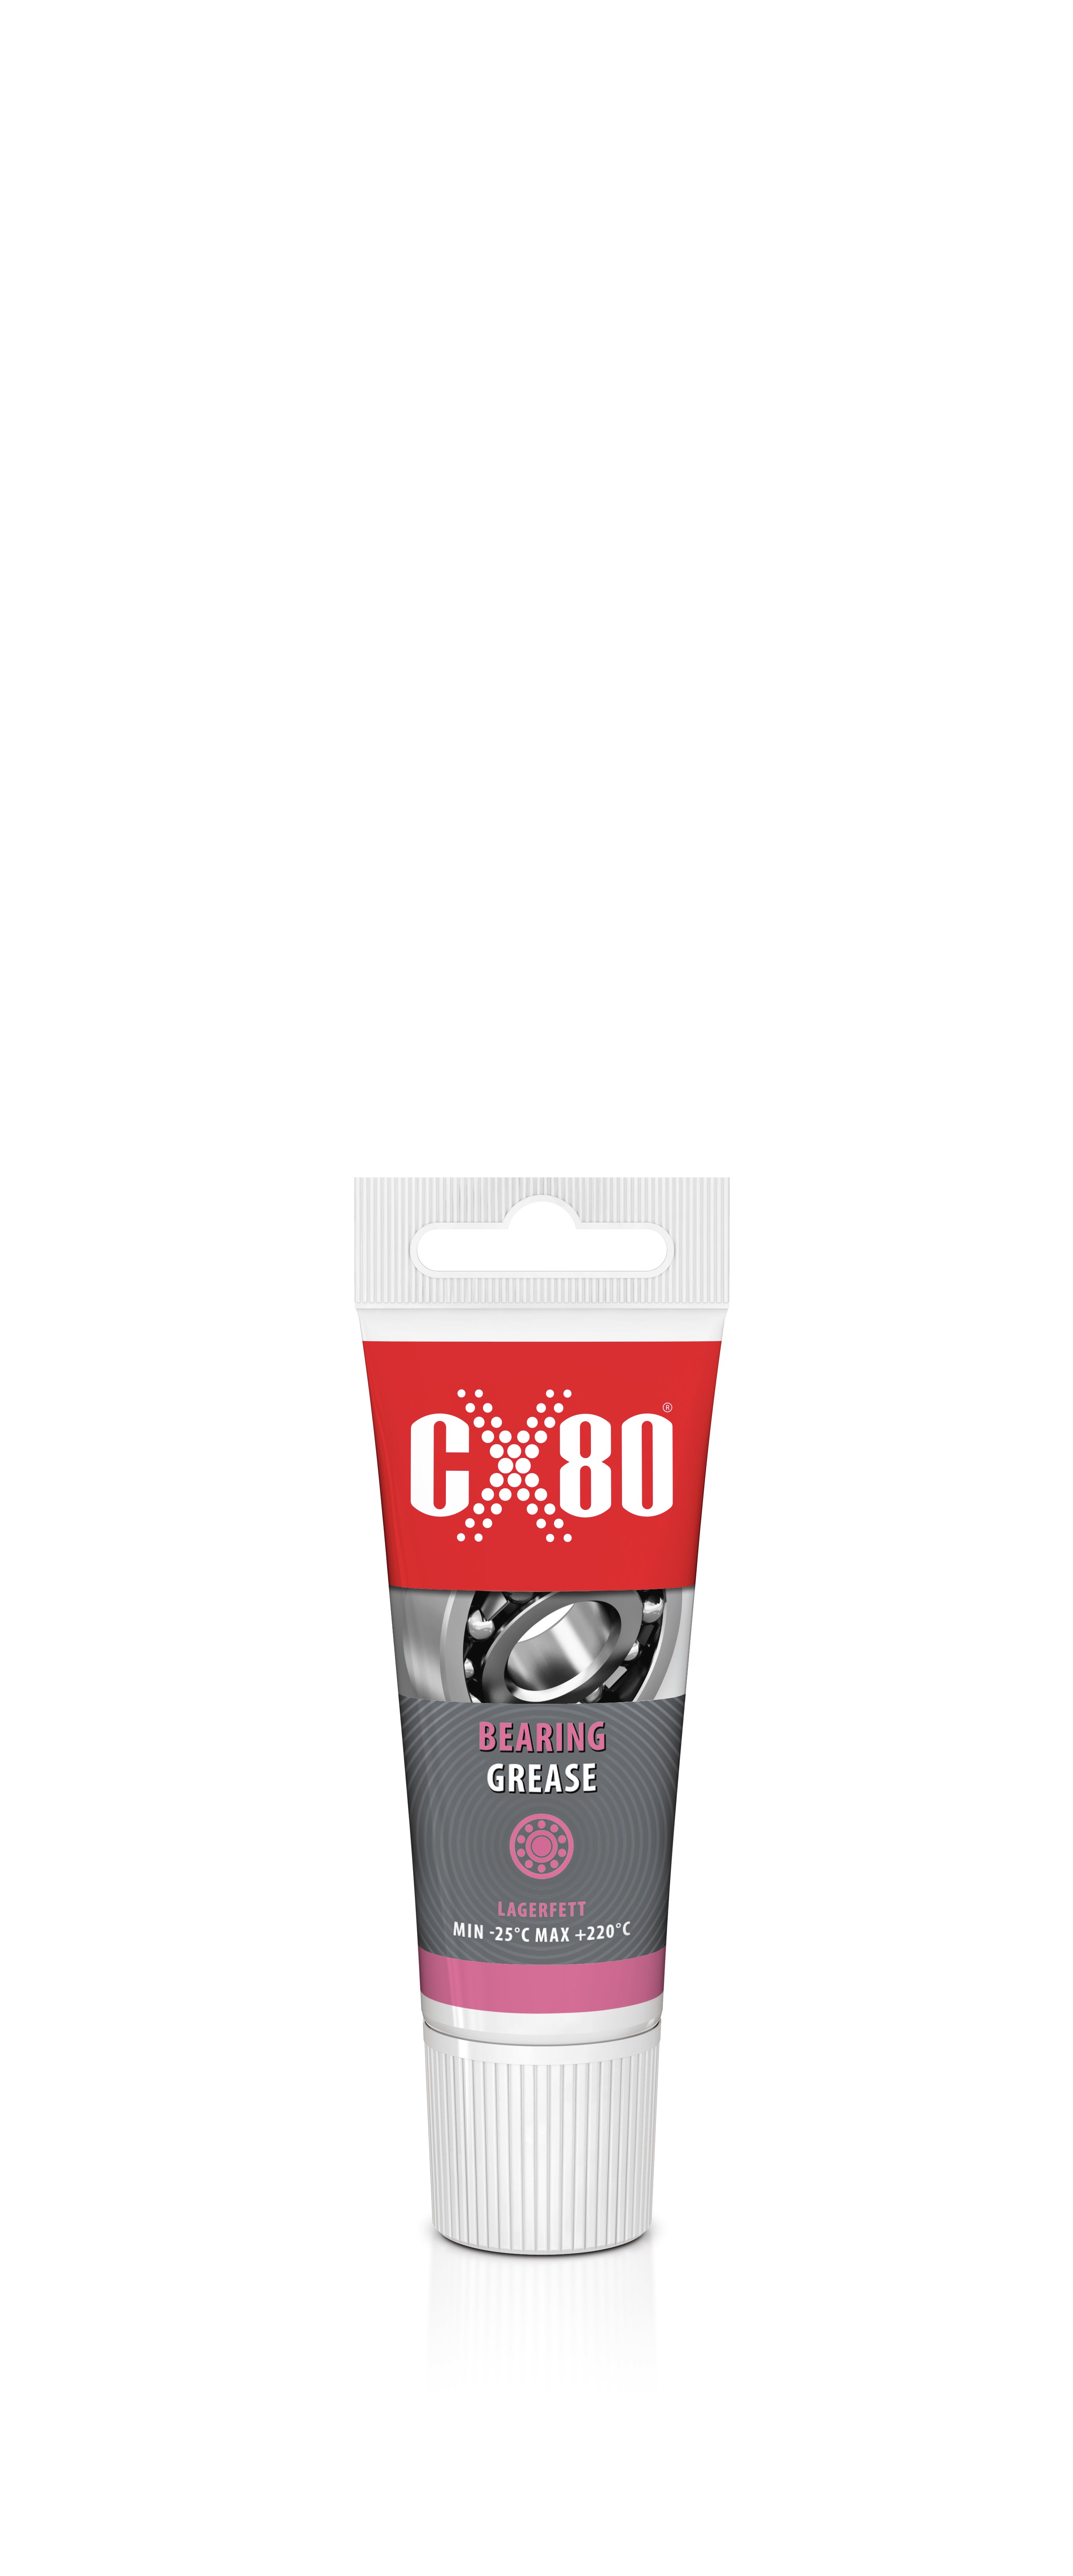 CX80 LAGERFETT, ABS-Schmierstoffe